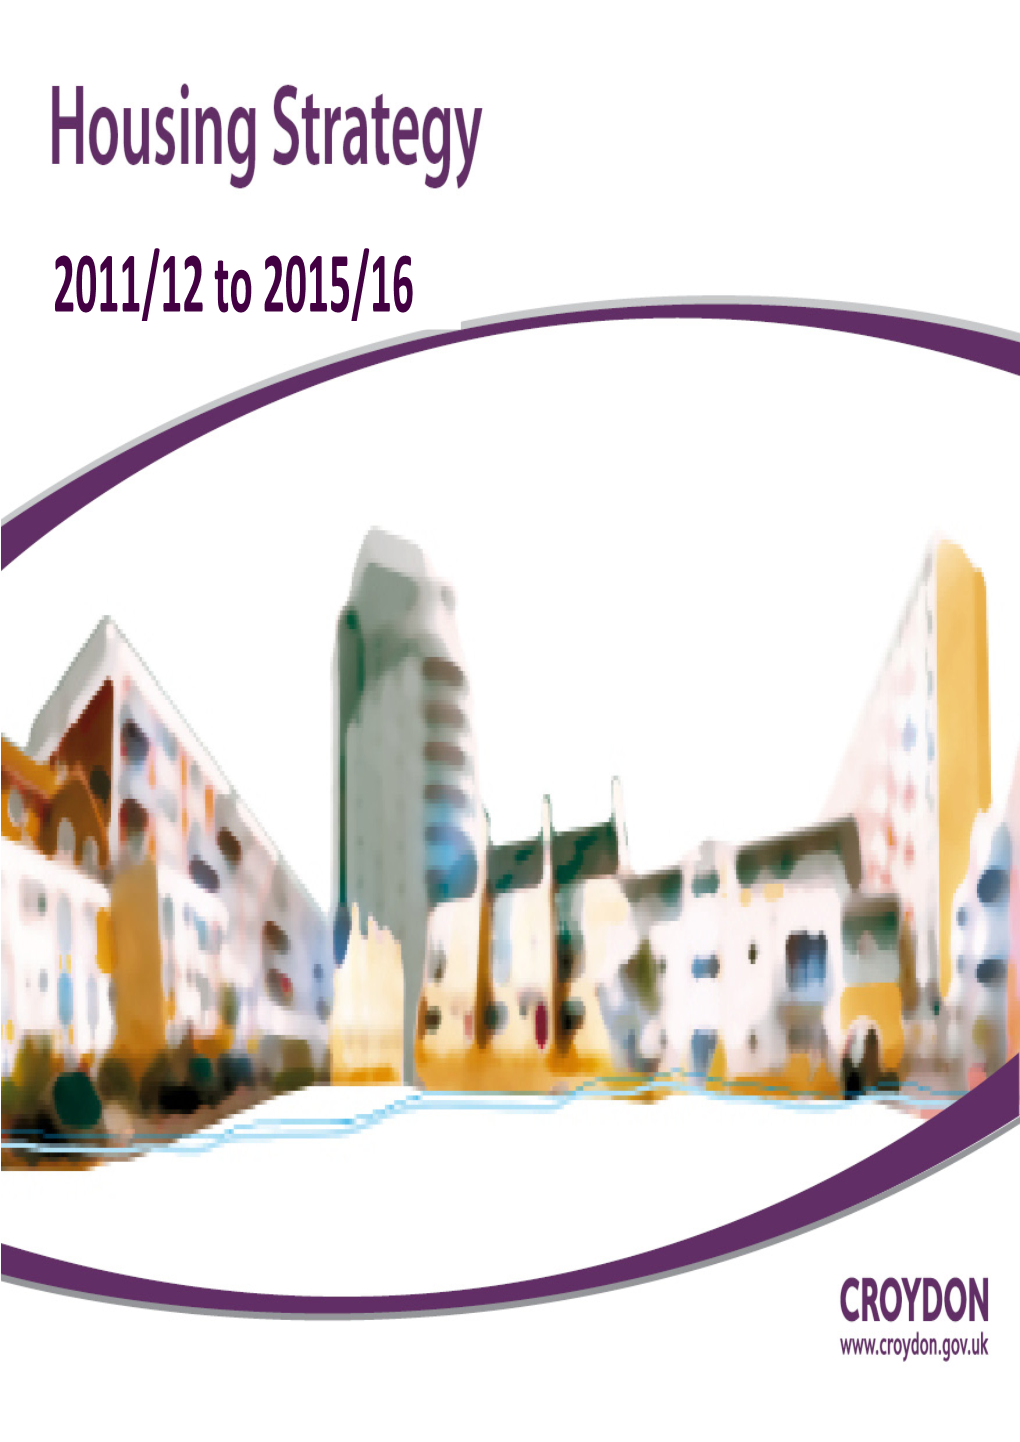 Housing Strategy 2011/12-2015/16